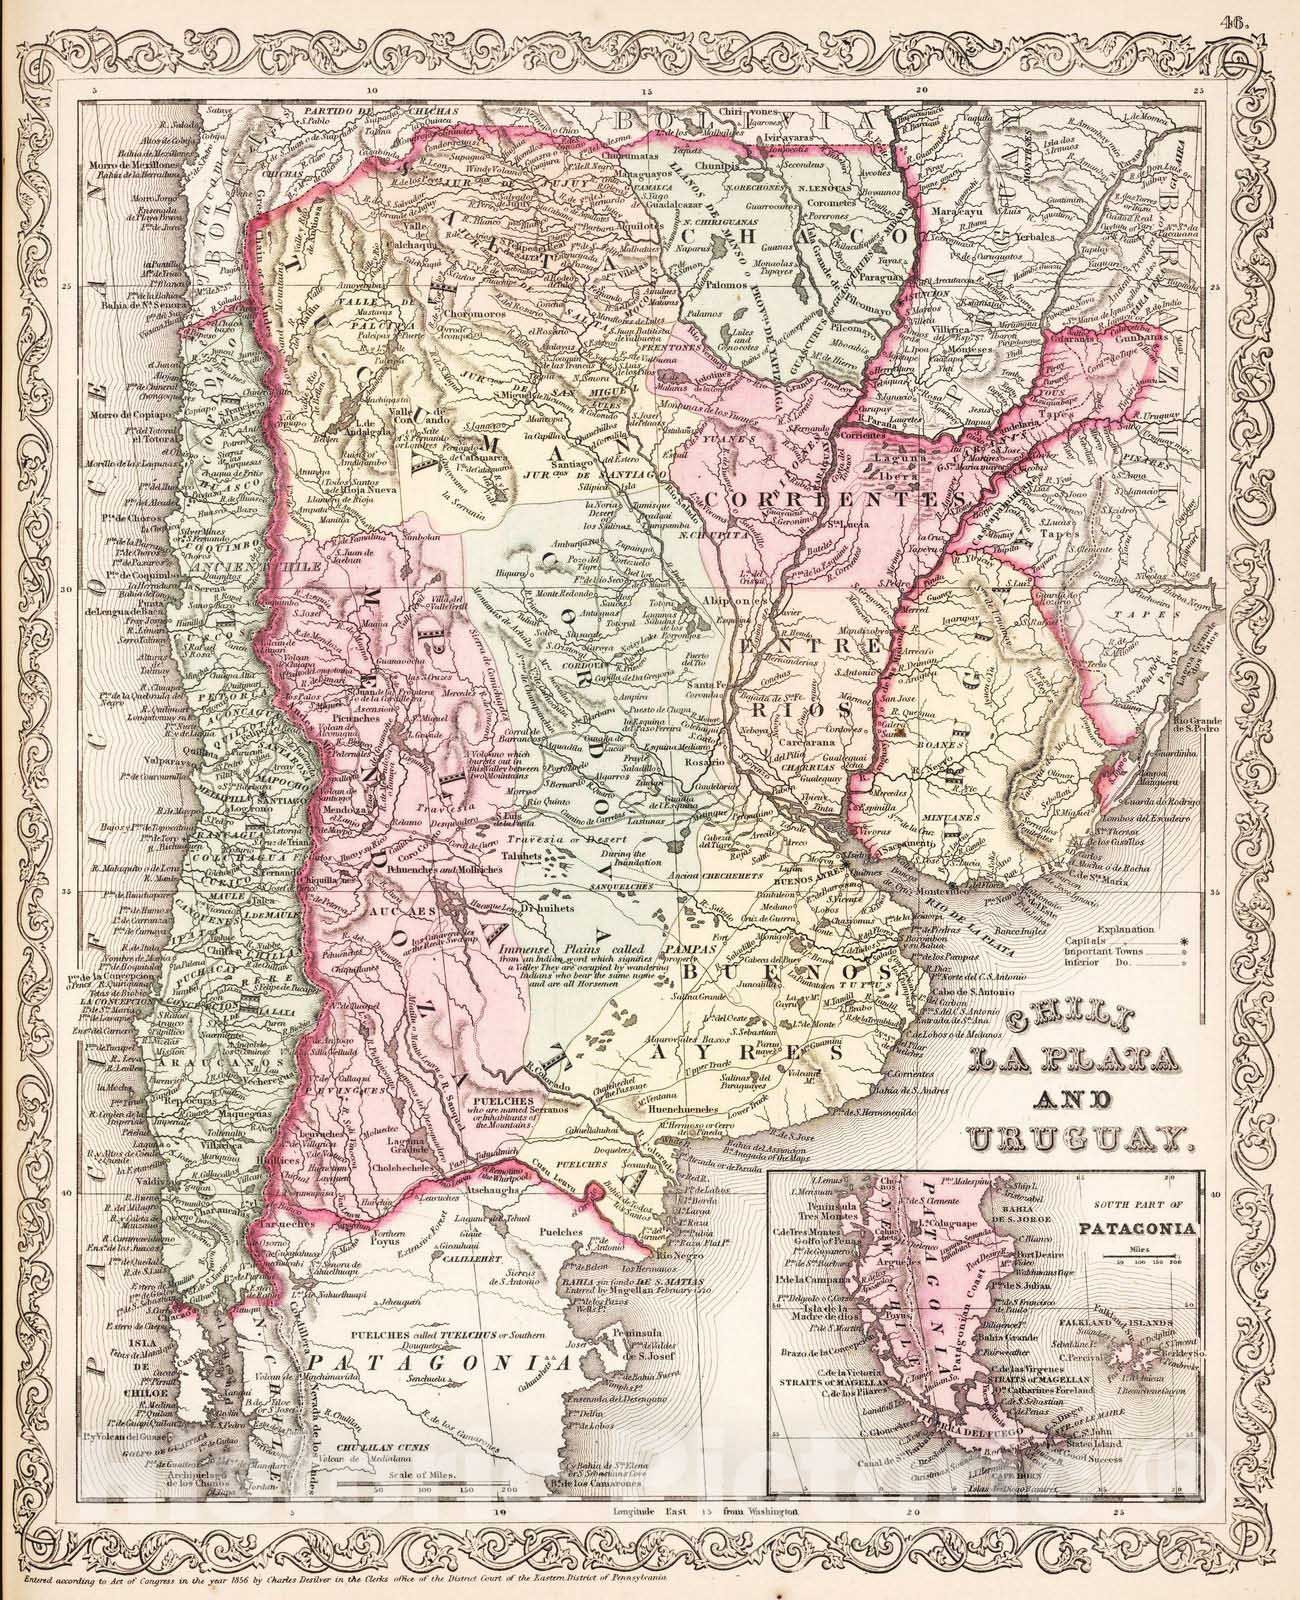 Historic Map : 1857 Chili Laplata and Uruguay - Vintage Wall Art